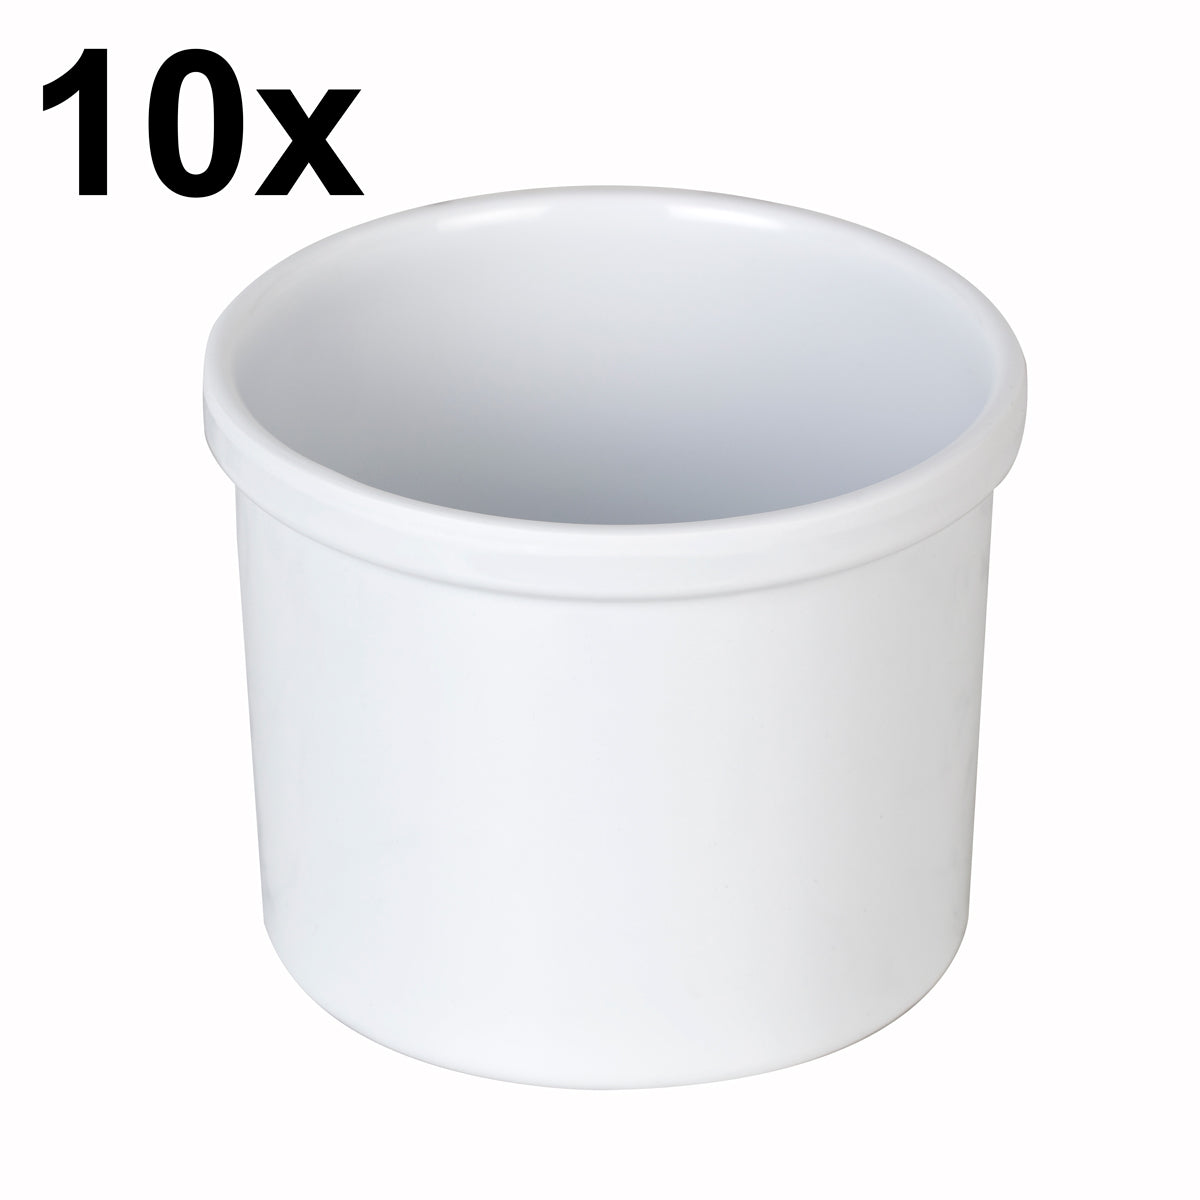 (10 stk) Melamin skål til kagestativ / buffestativ - Højde: 10 cm